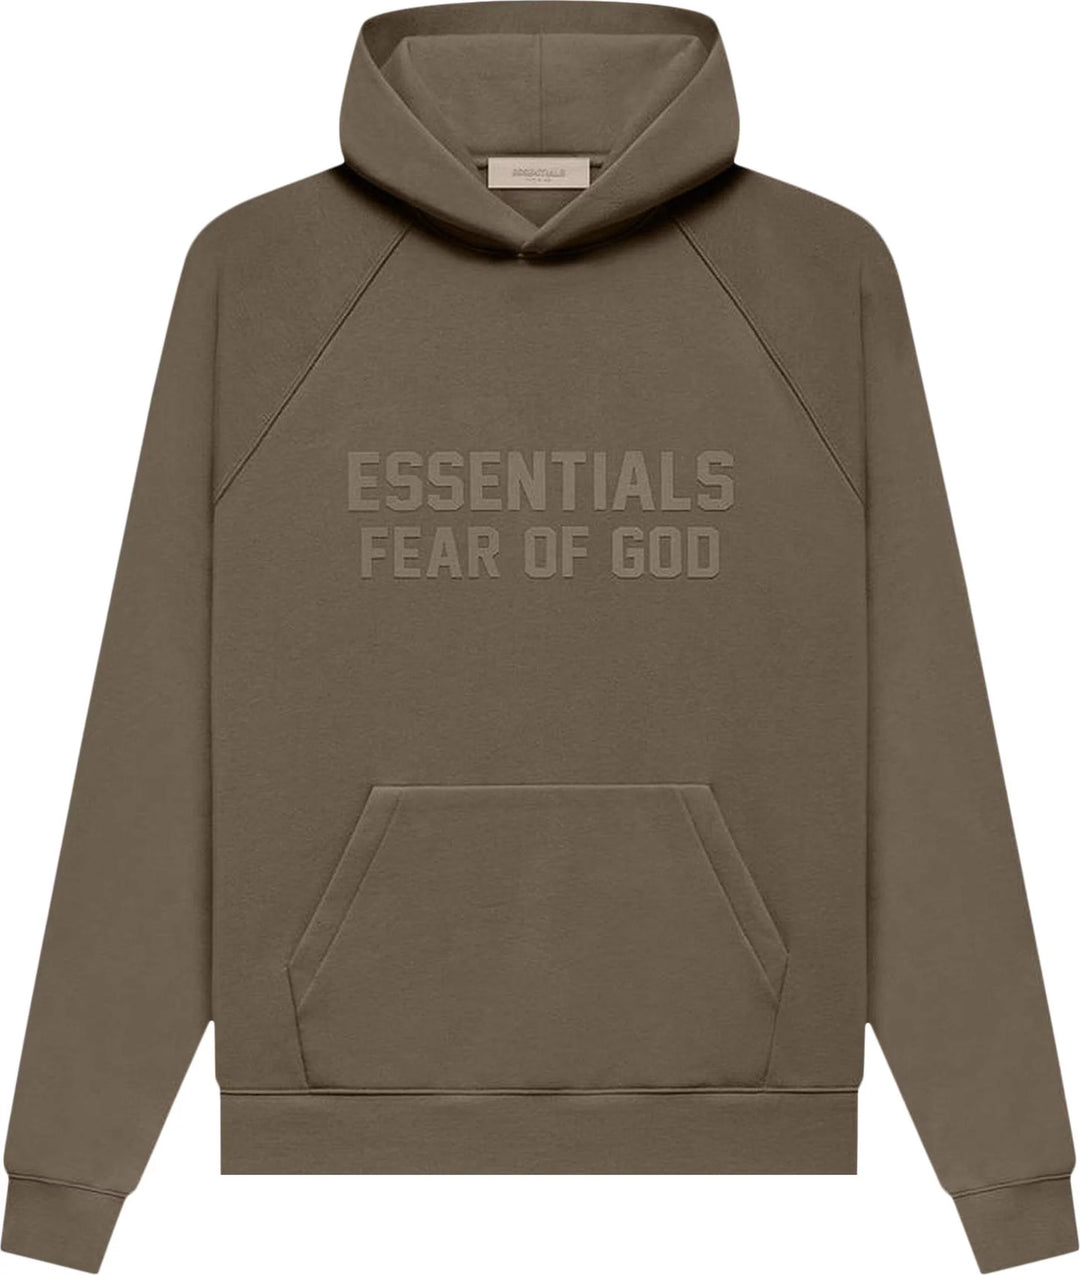  essentials fear of god hoodie wood